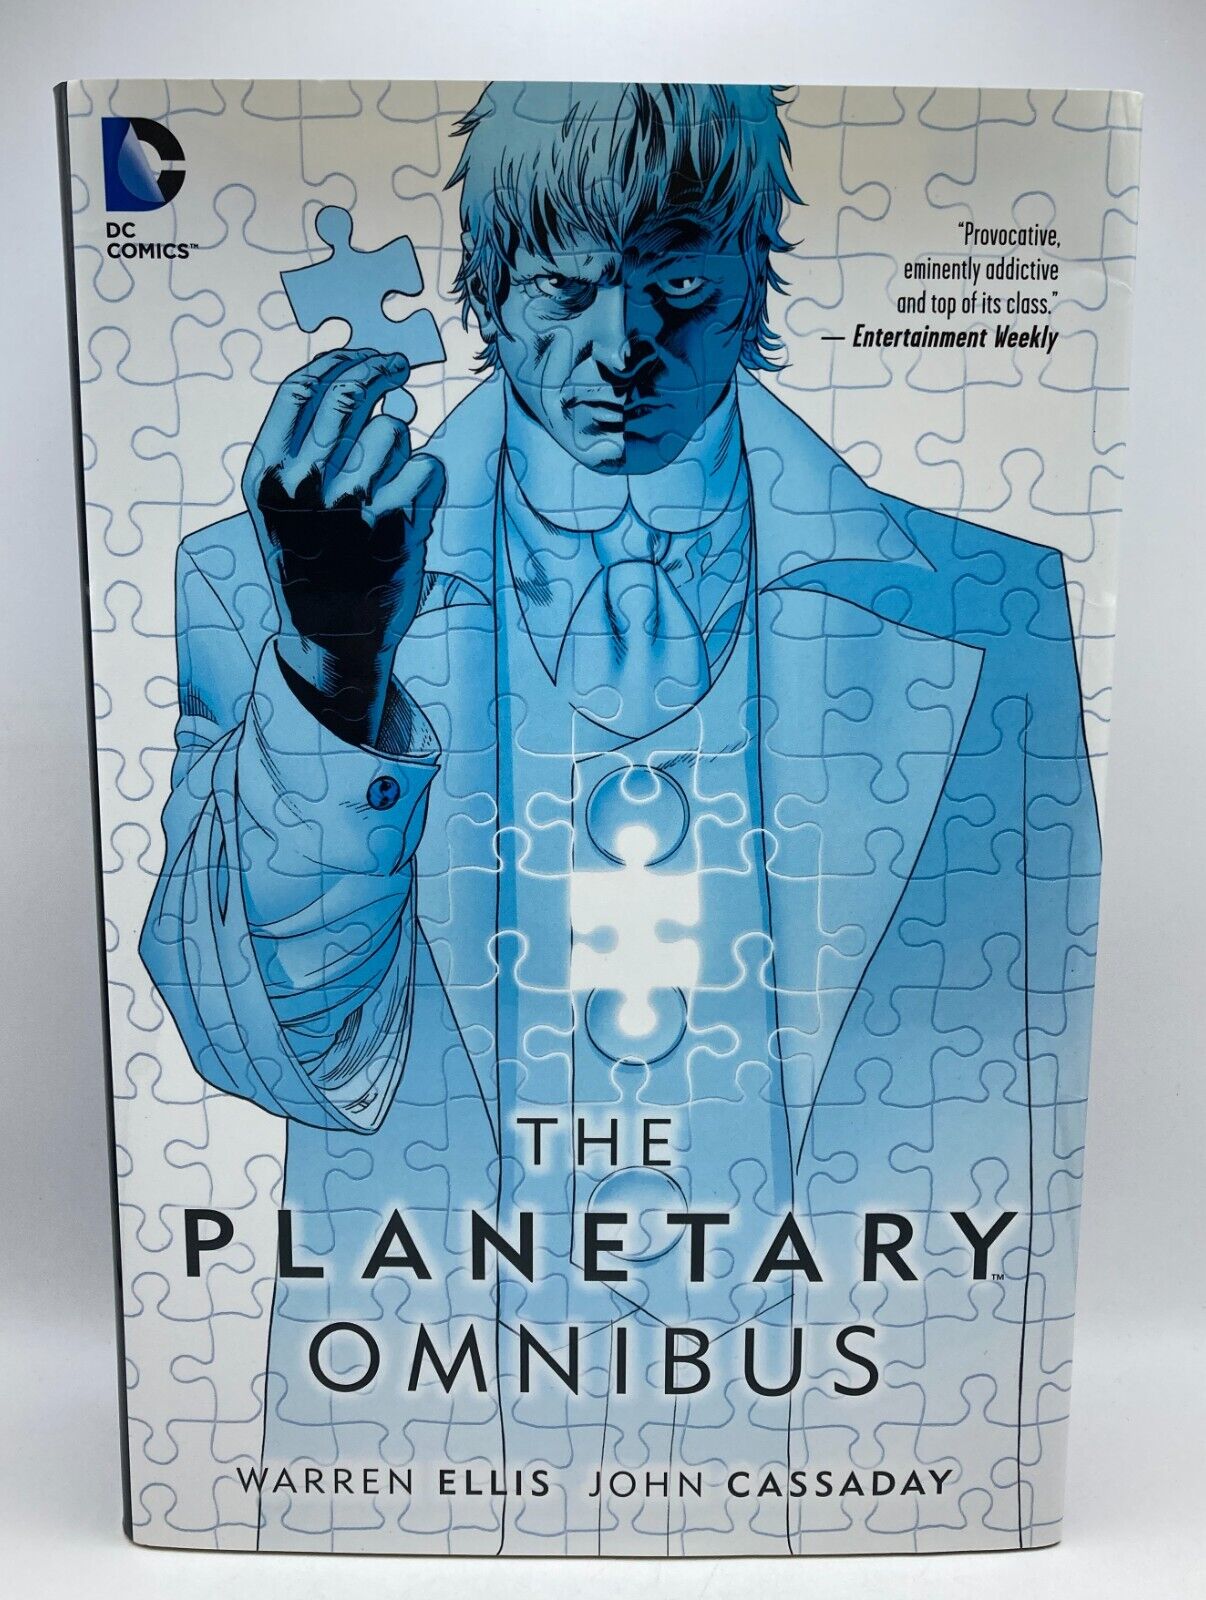 The Planetary Omnibus by Warren Ellis & John Cassaday (DC Comics) 2014